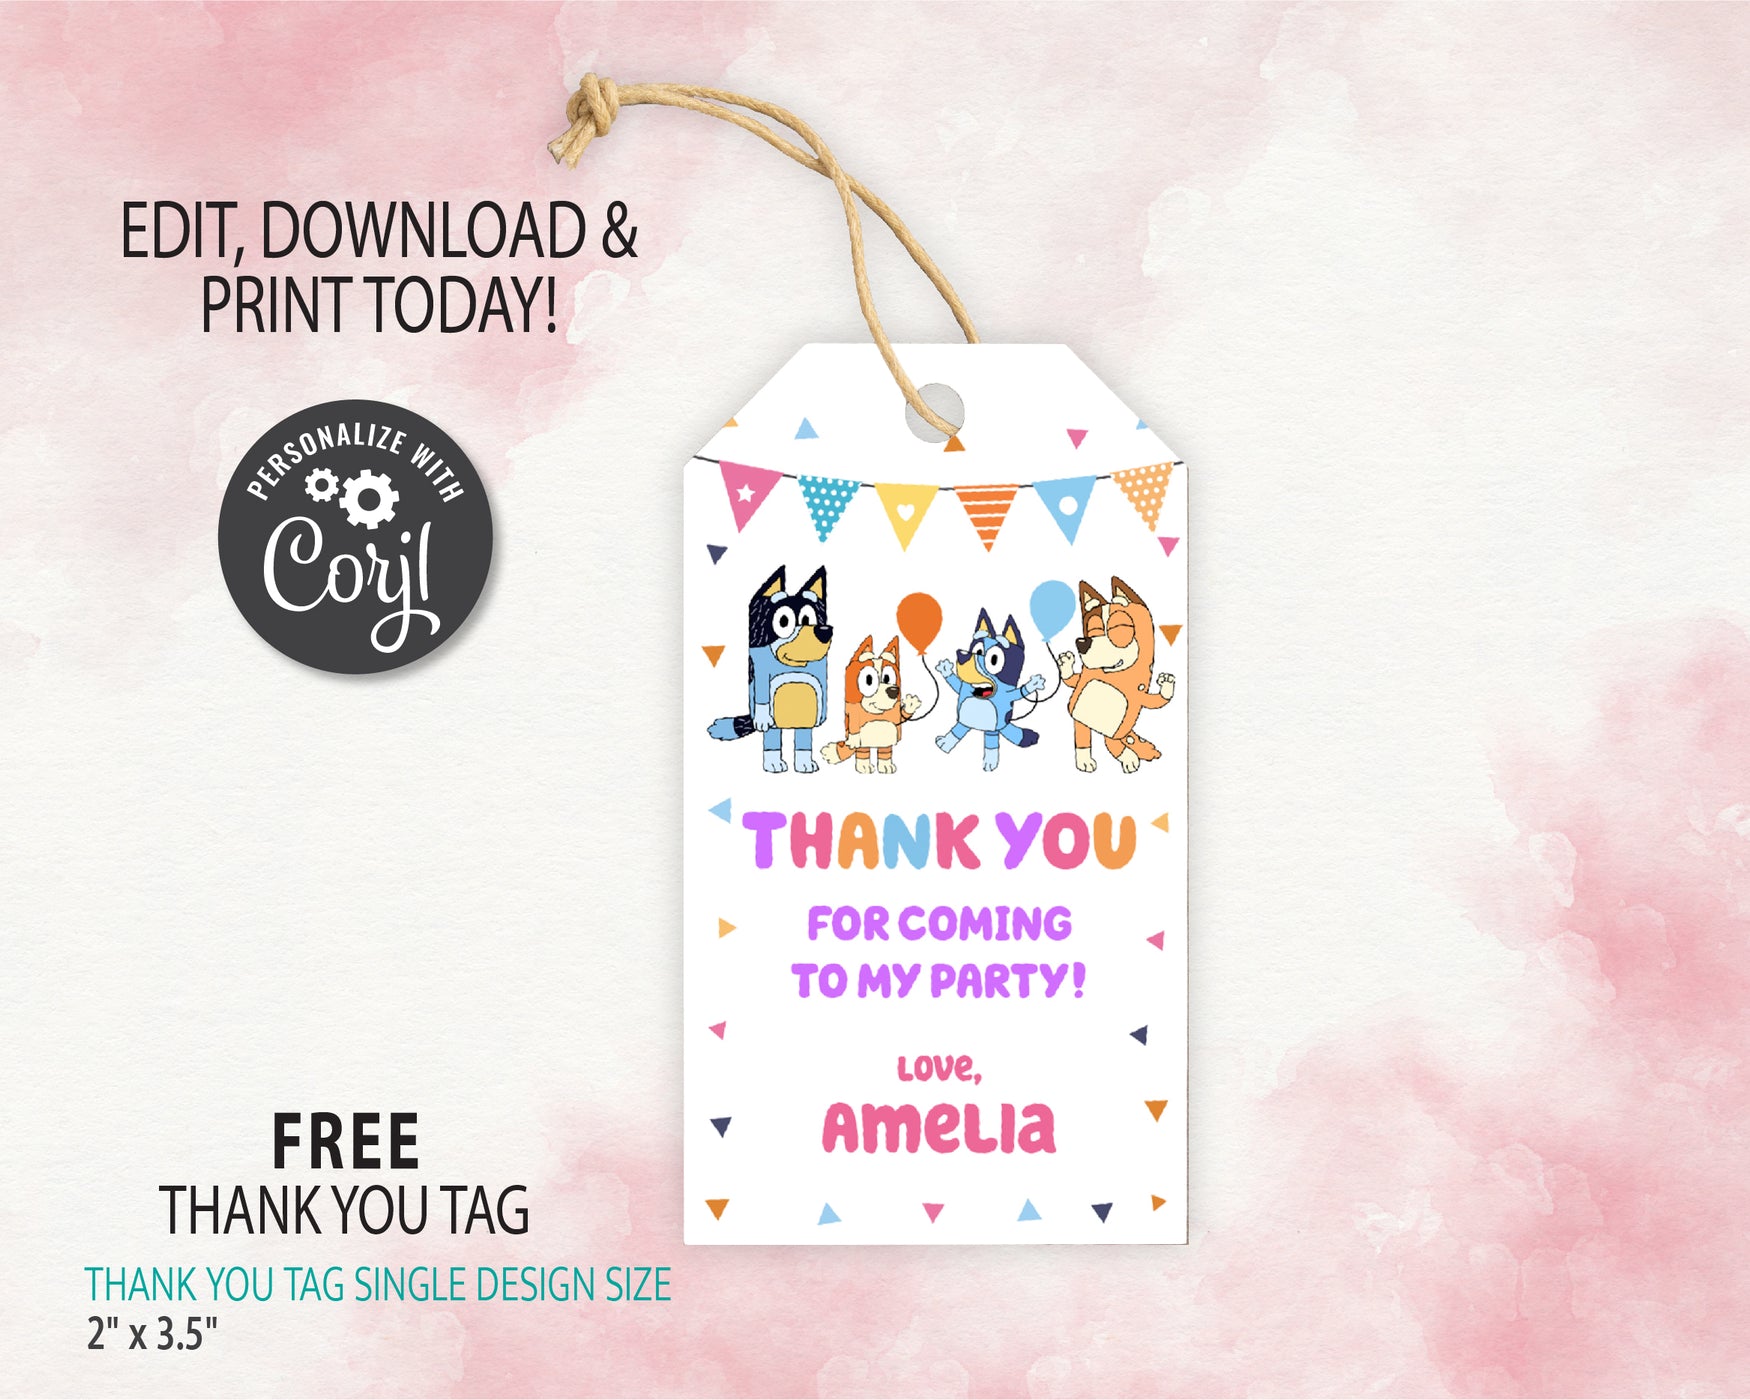 Free printable kids birthday invitation templates